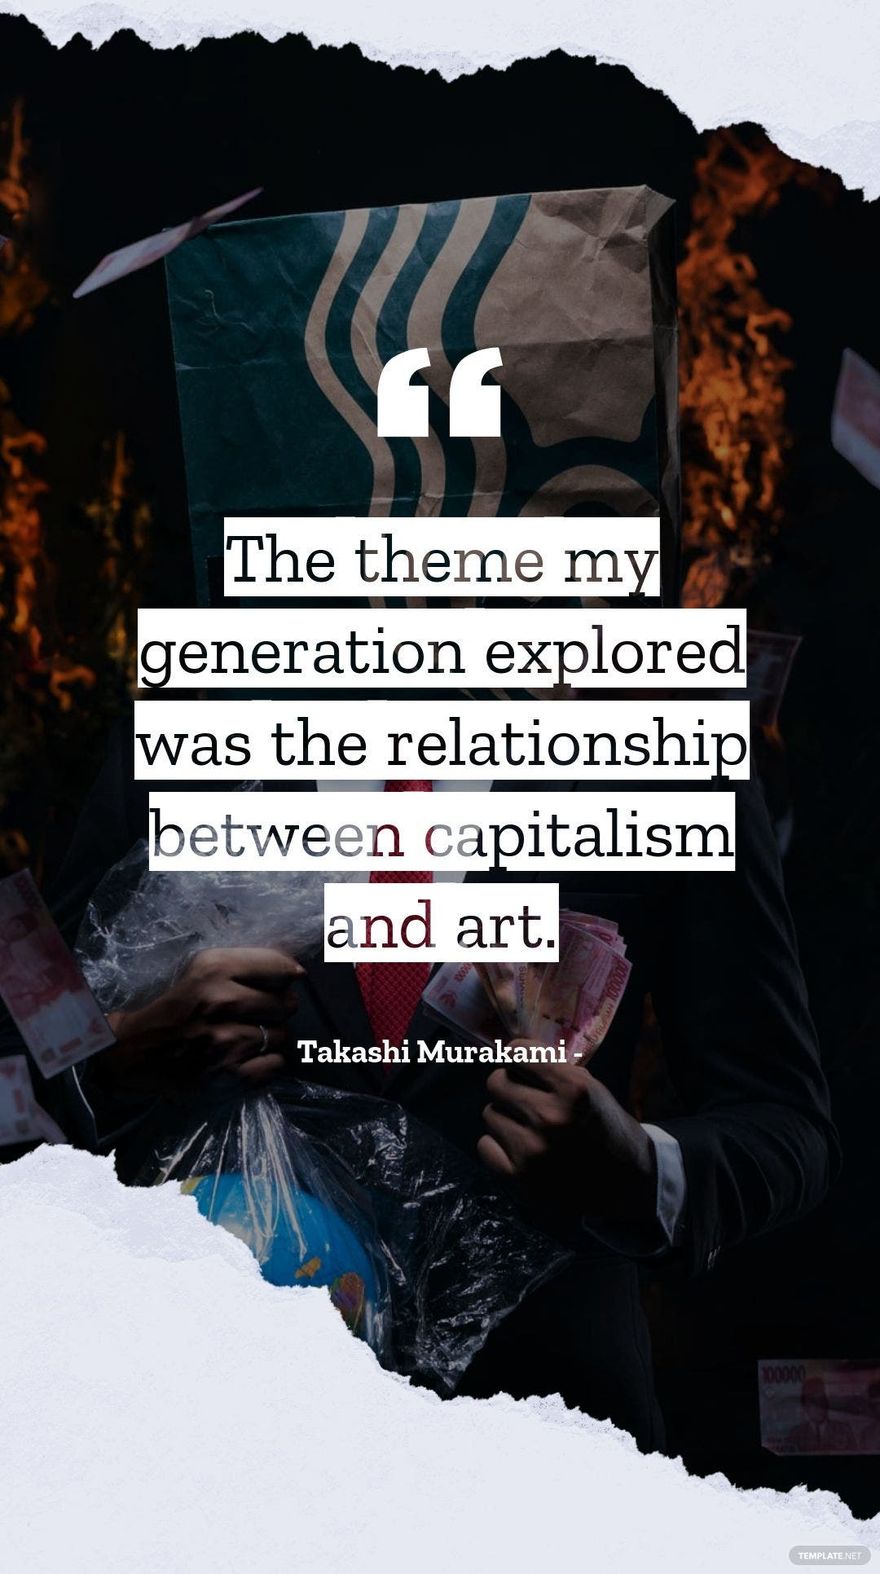 Takashi Murakami - The theme my generation explored was the relationship between capitalism and art.